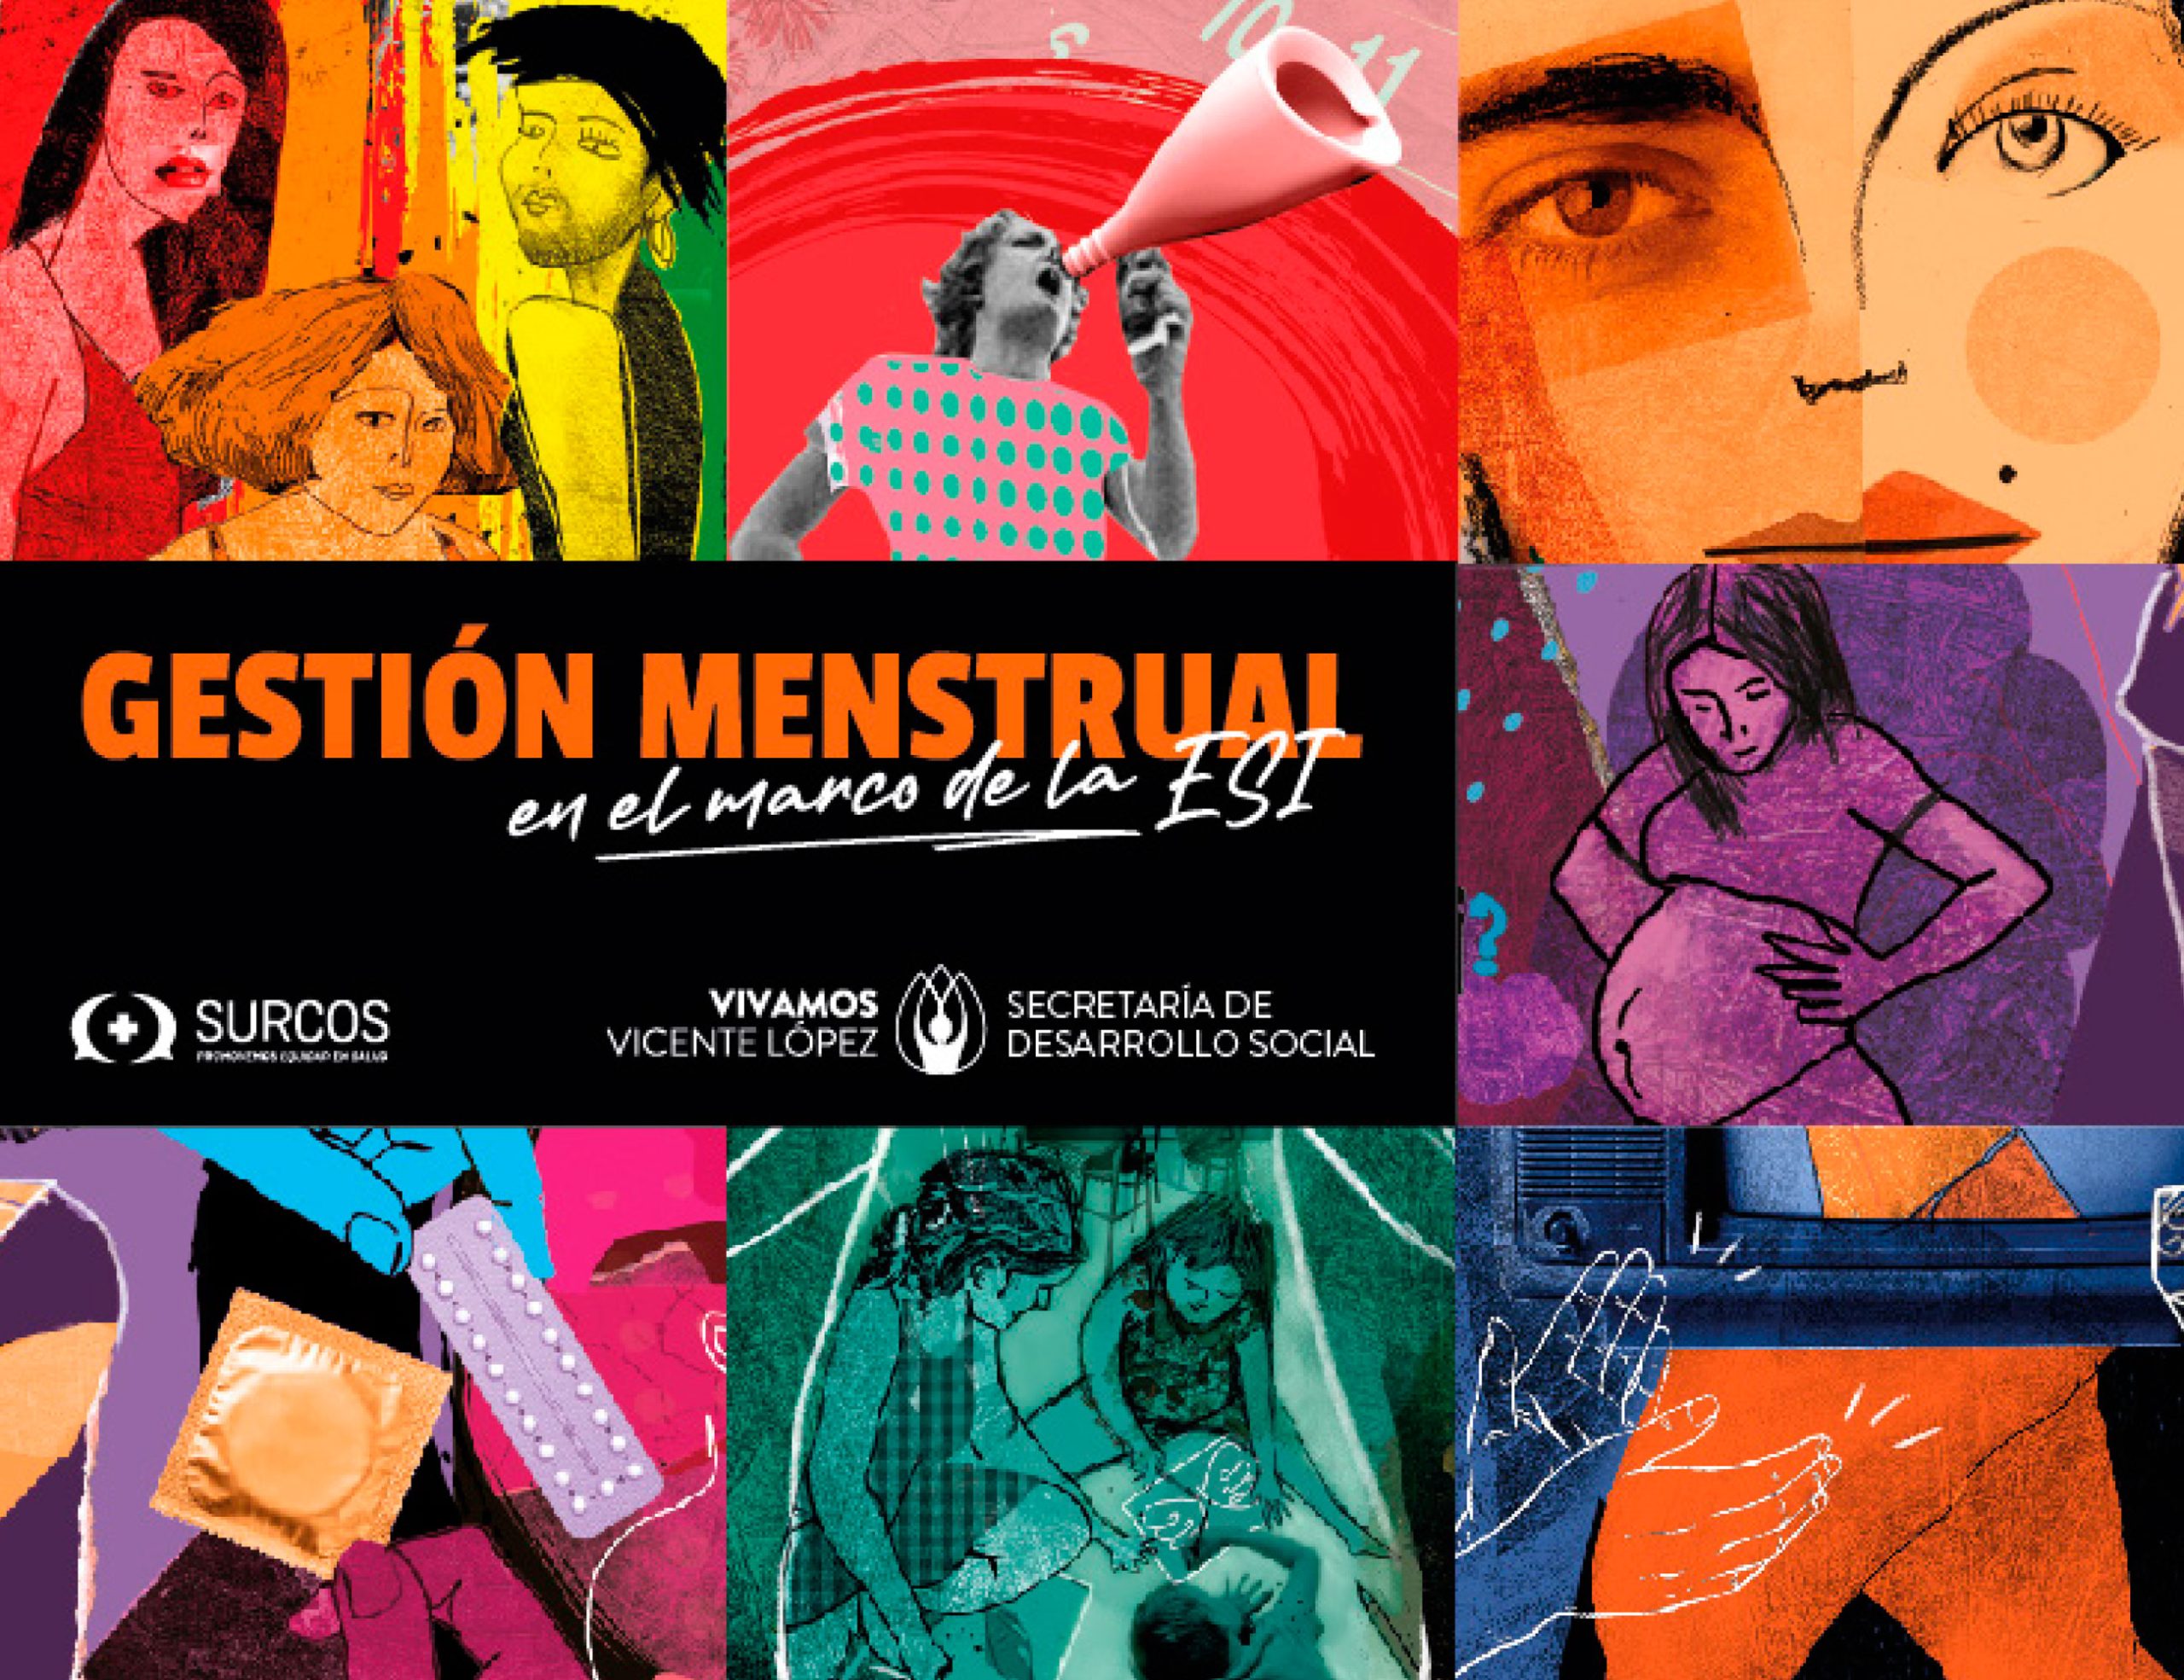 Menstrual hygiene management (MHM)